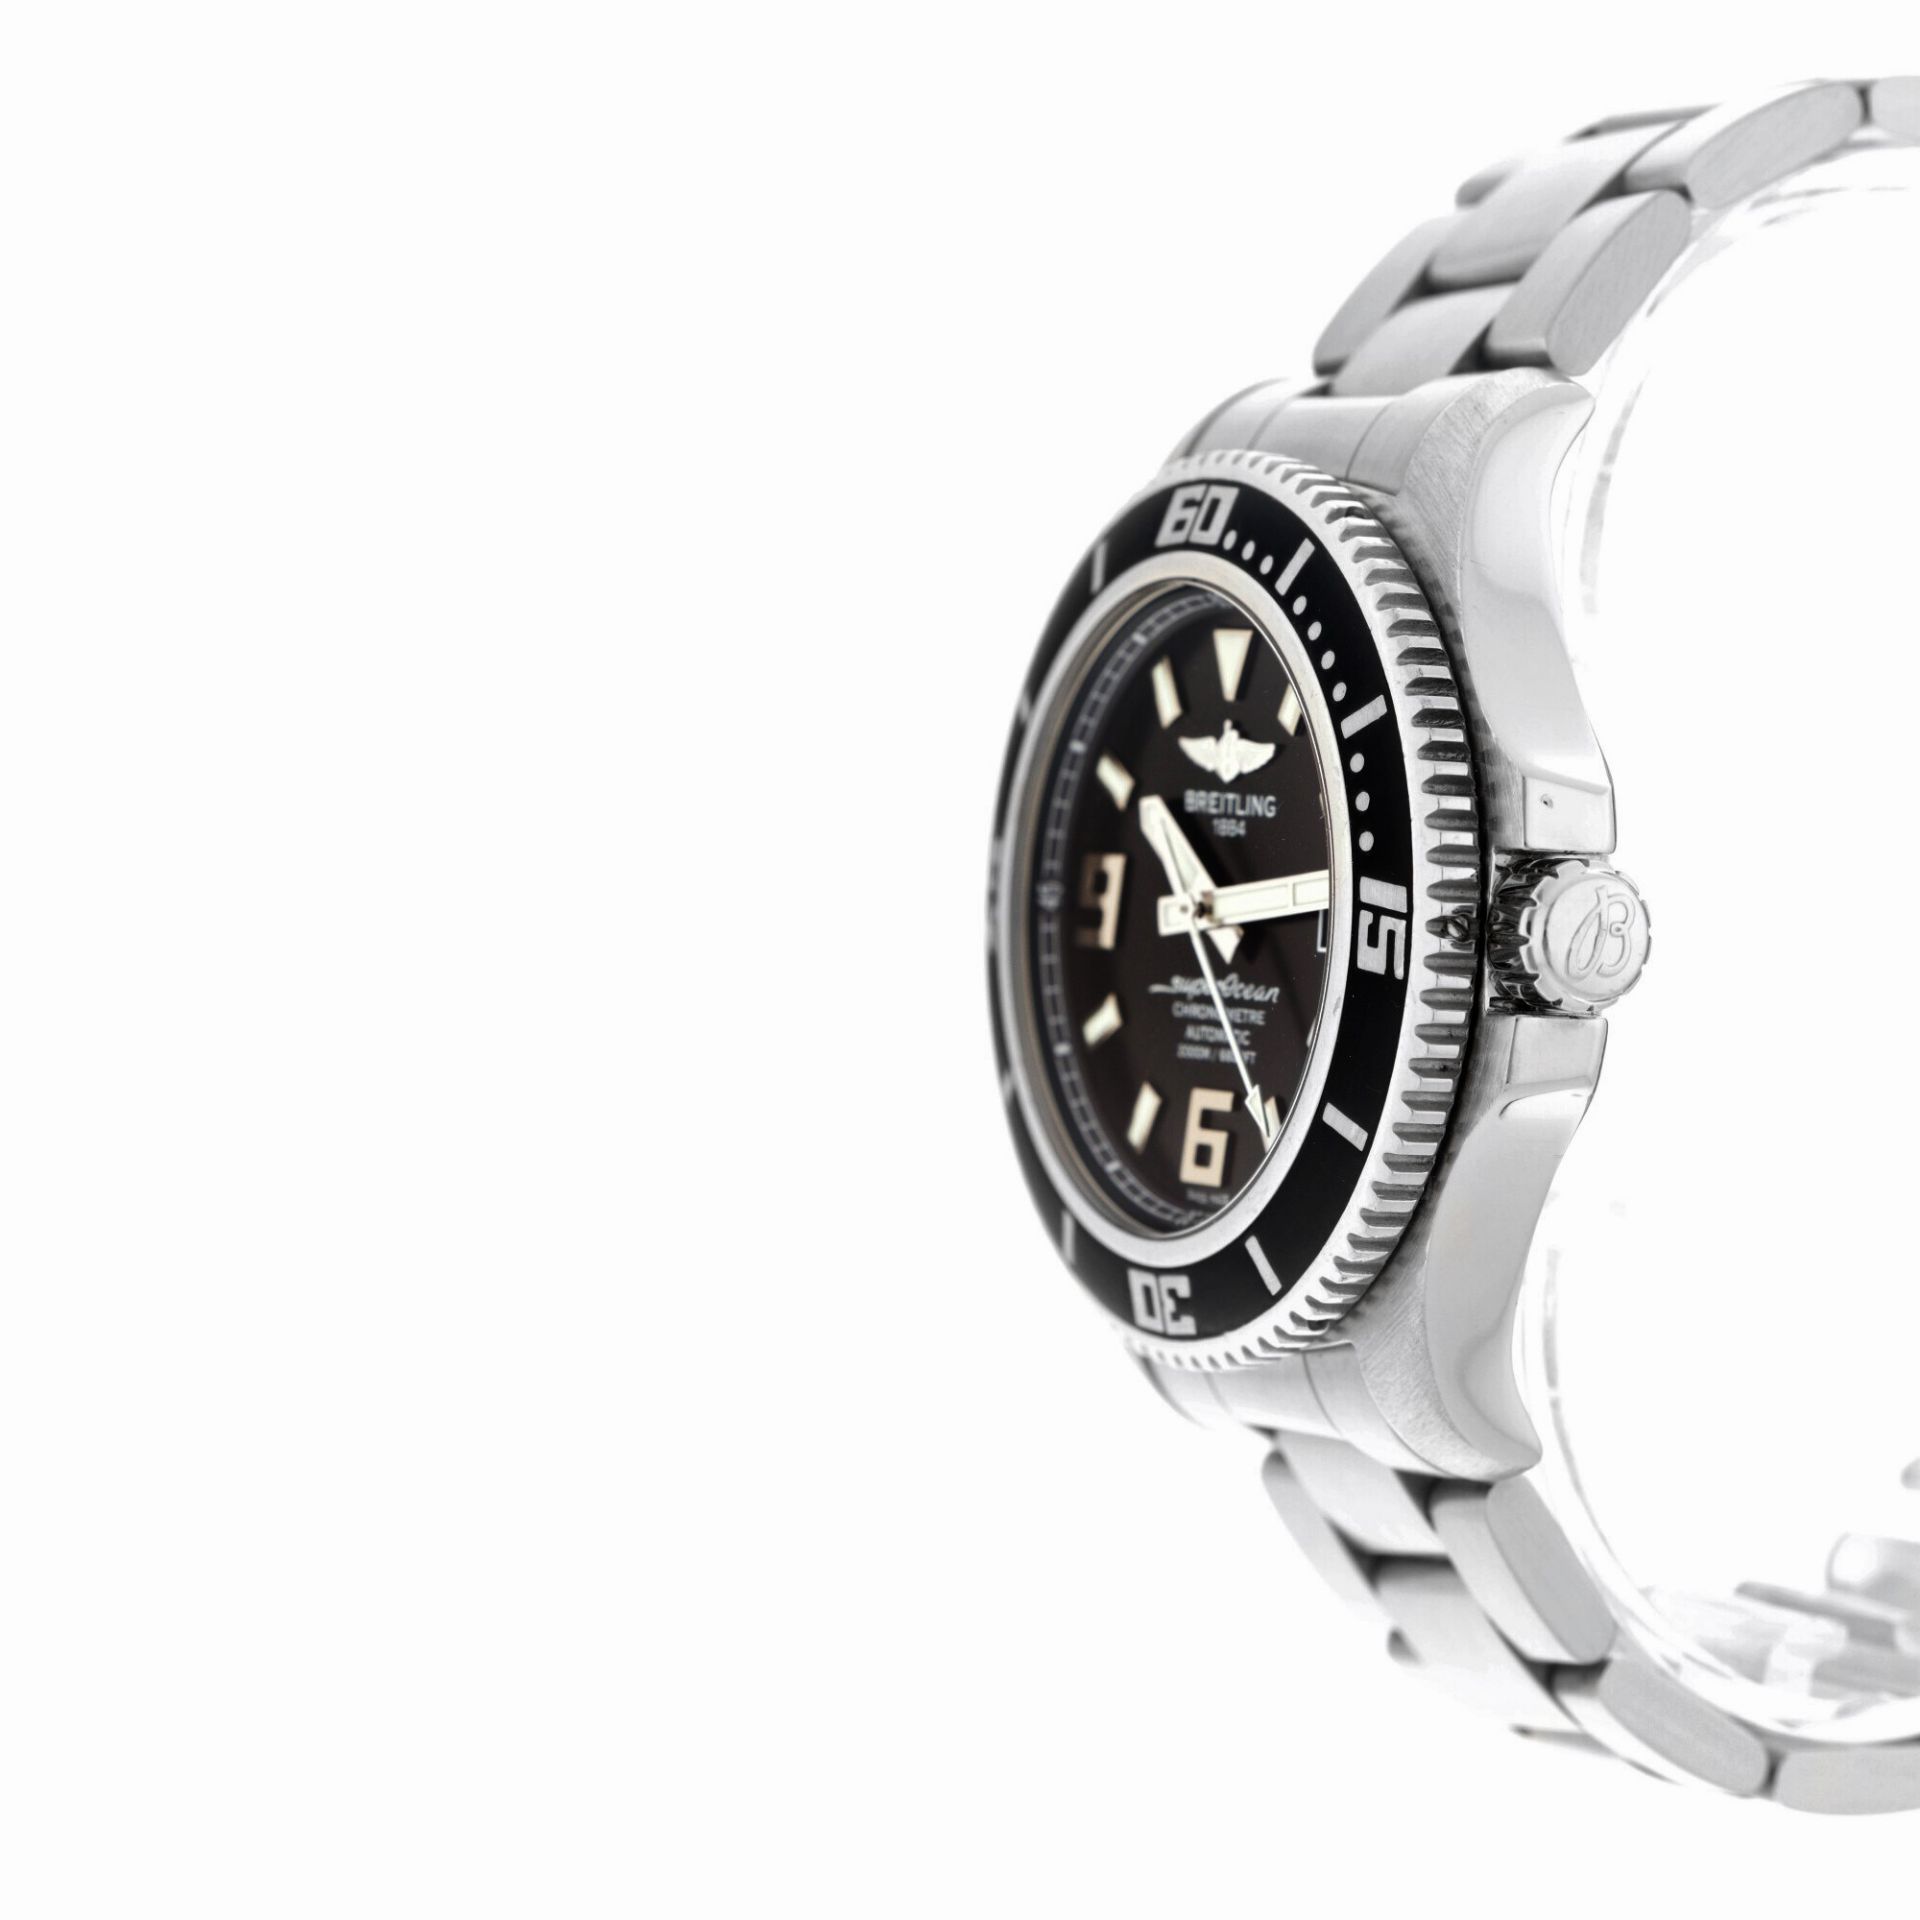 Breitling SuperOcean 44 A1739102/BA77 - Men's watch - 2014. - Image 5 of 6